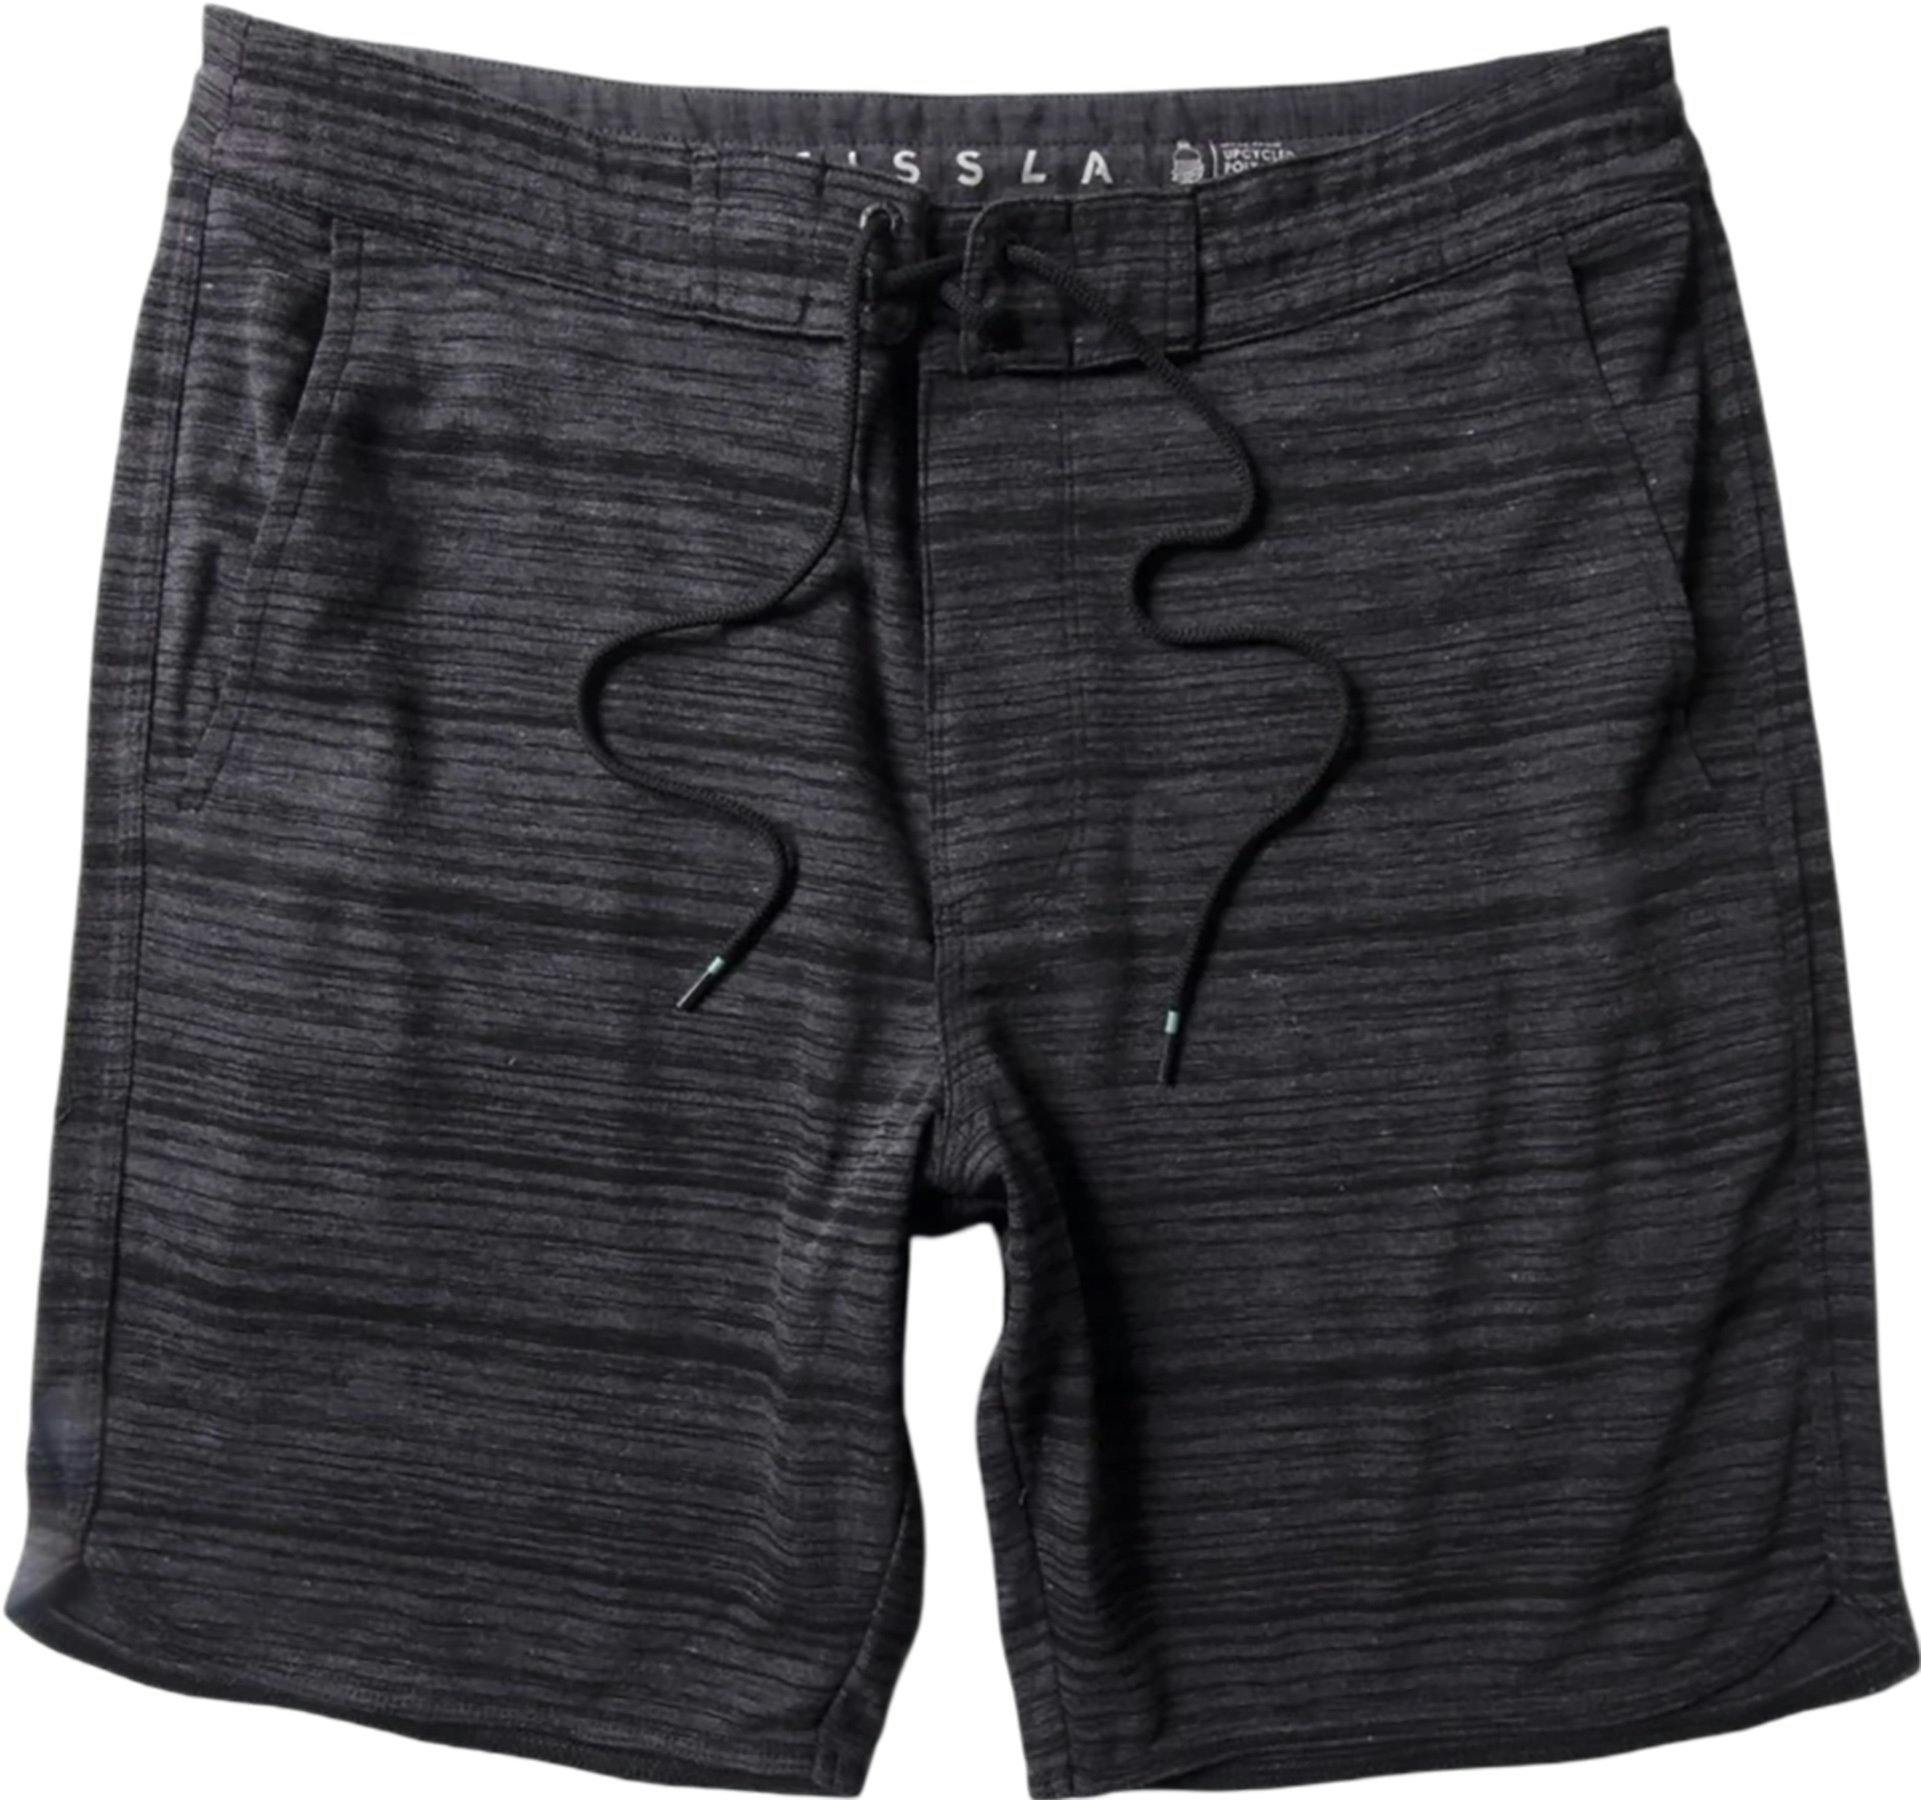 Product image for Locker Eco Sofa Surfer Shorts 17" - Boys 